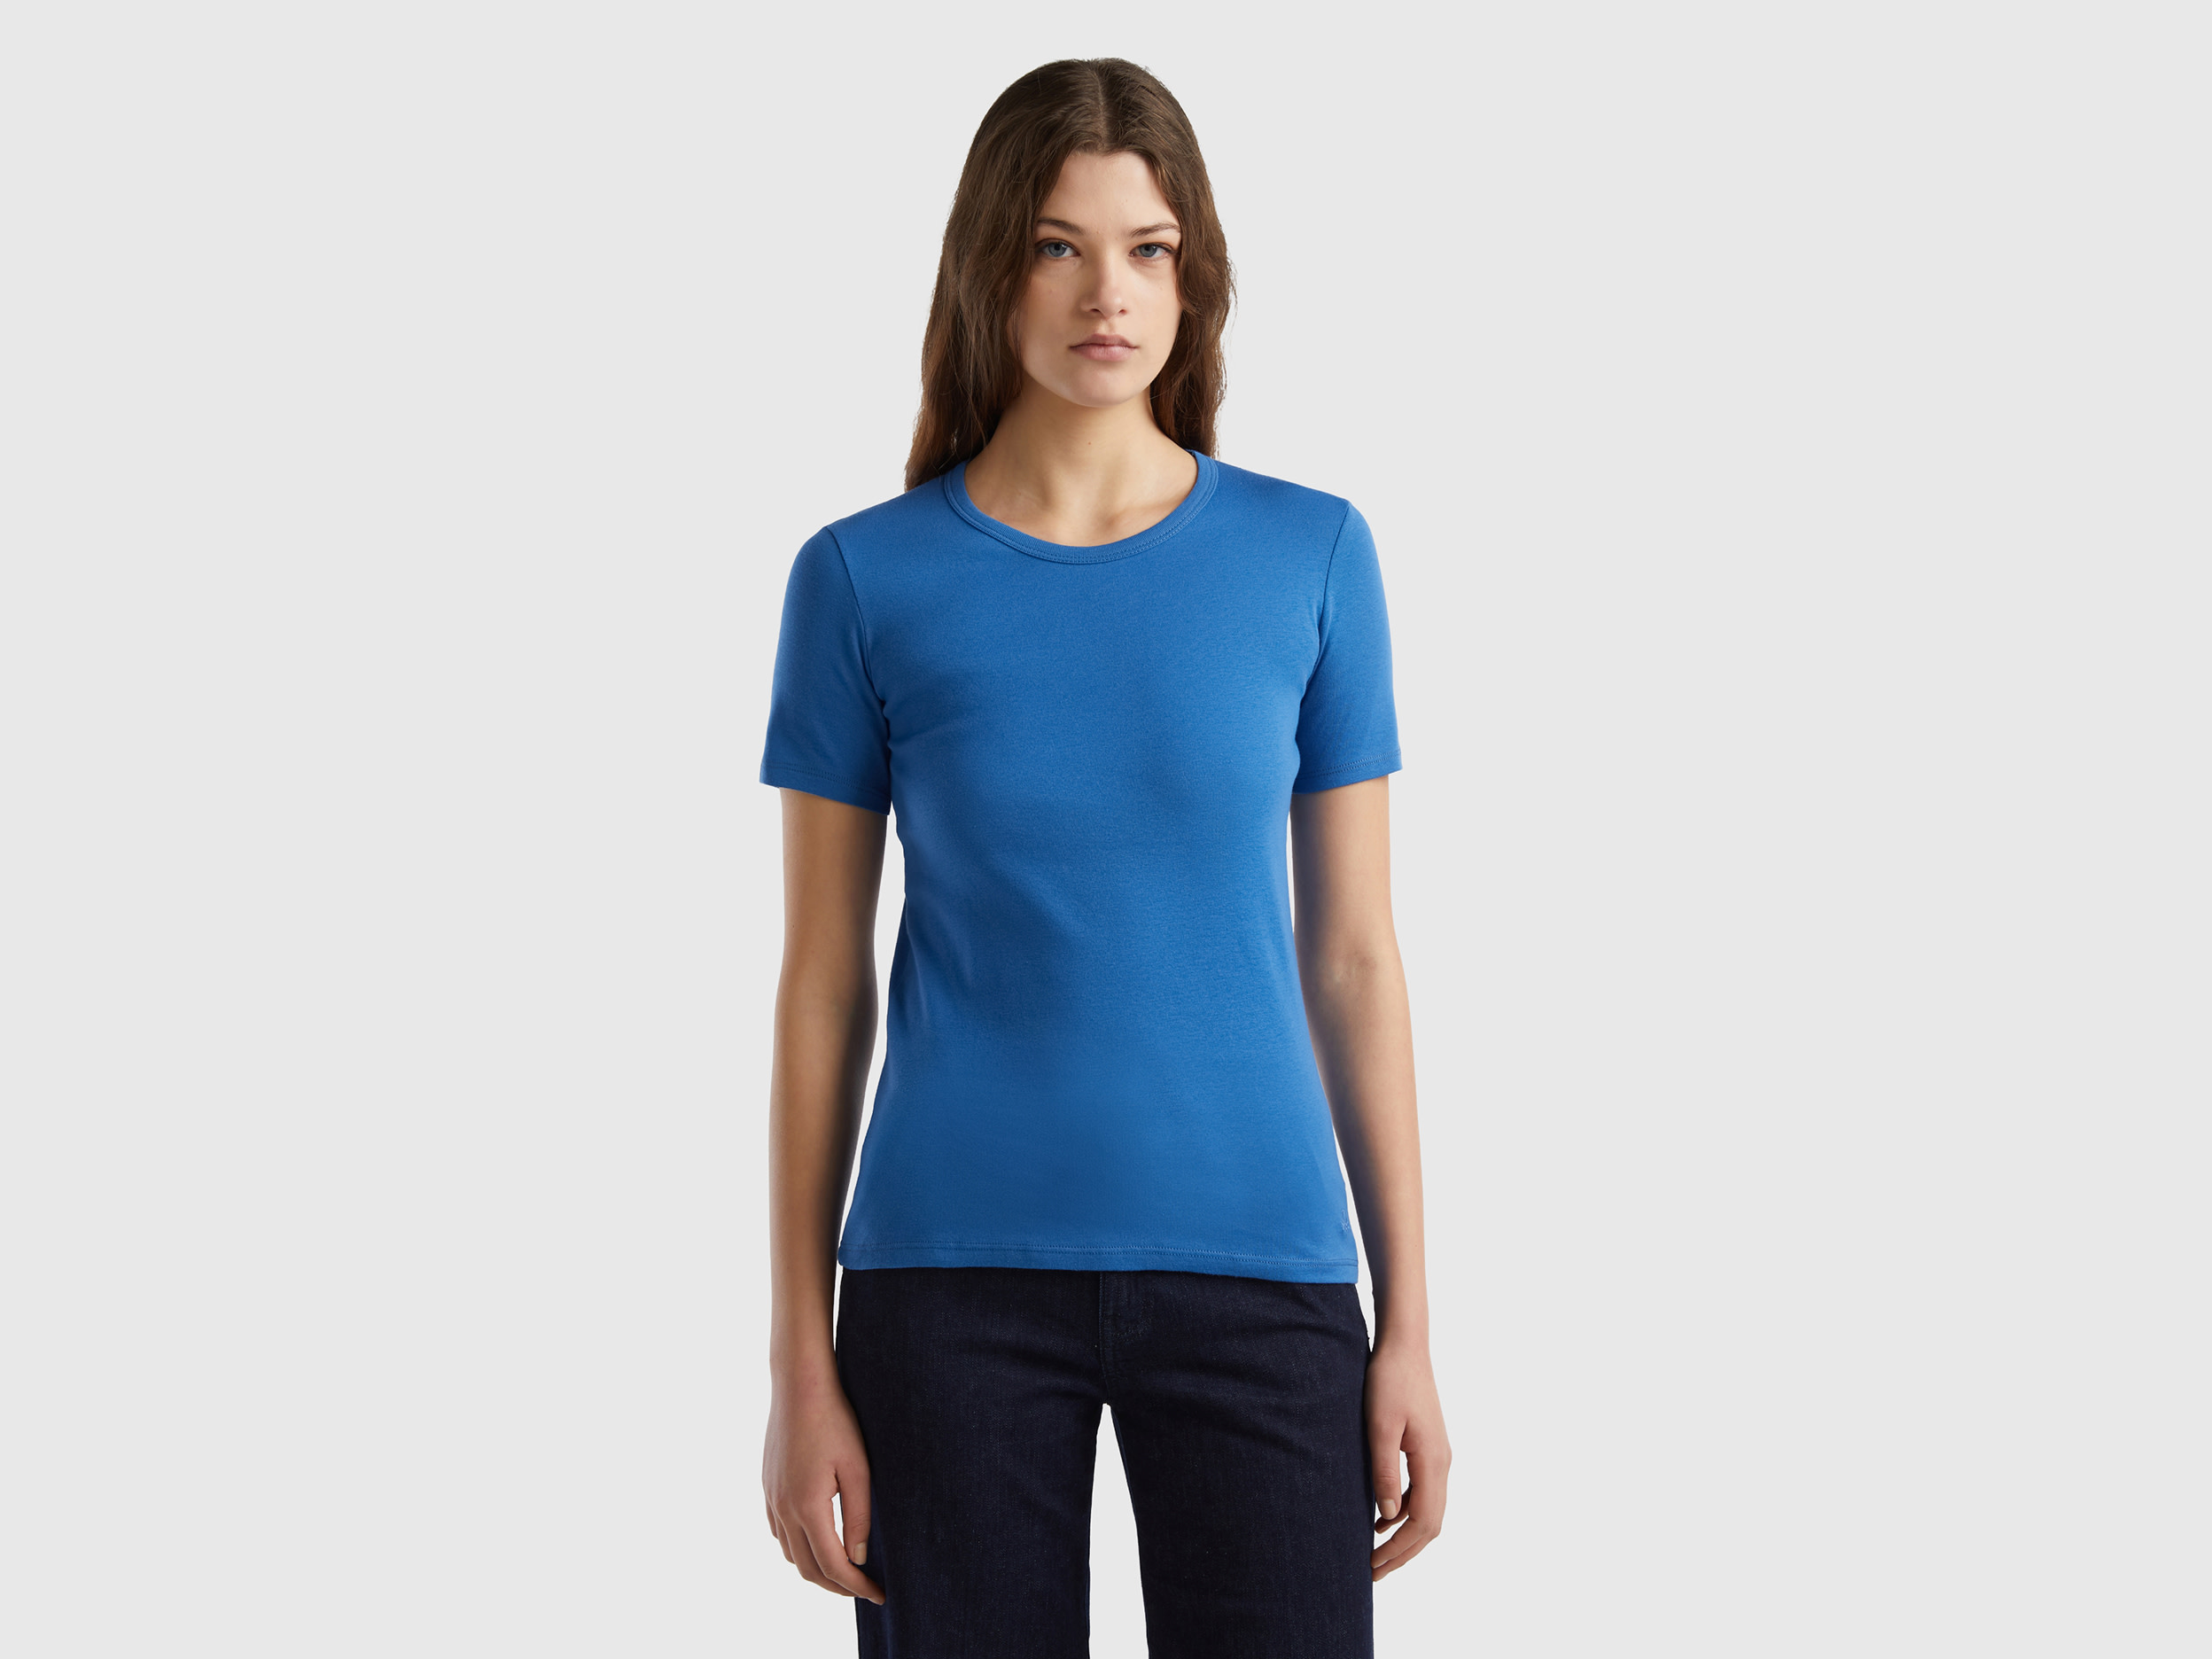 Benetton, Long Fiber Cotton T-shirt, size M, Blue, Women